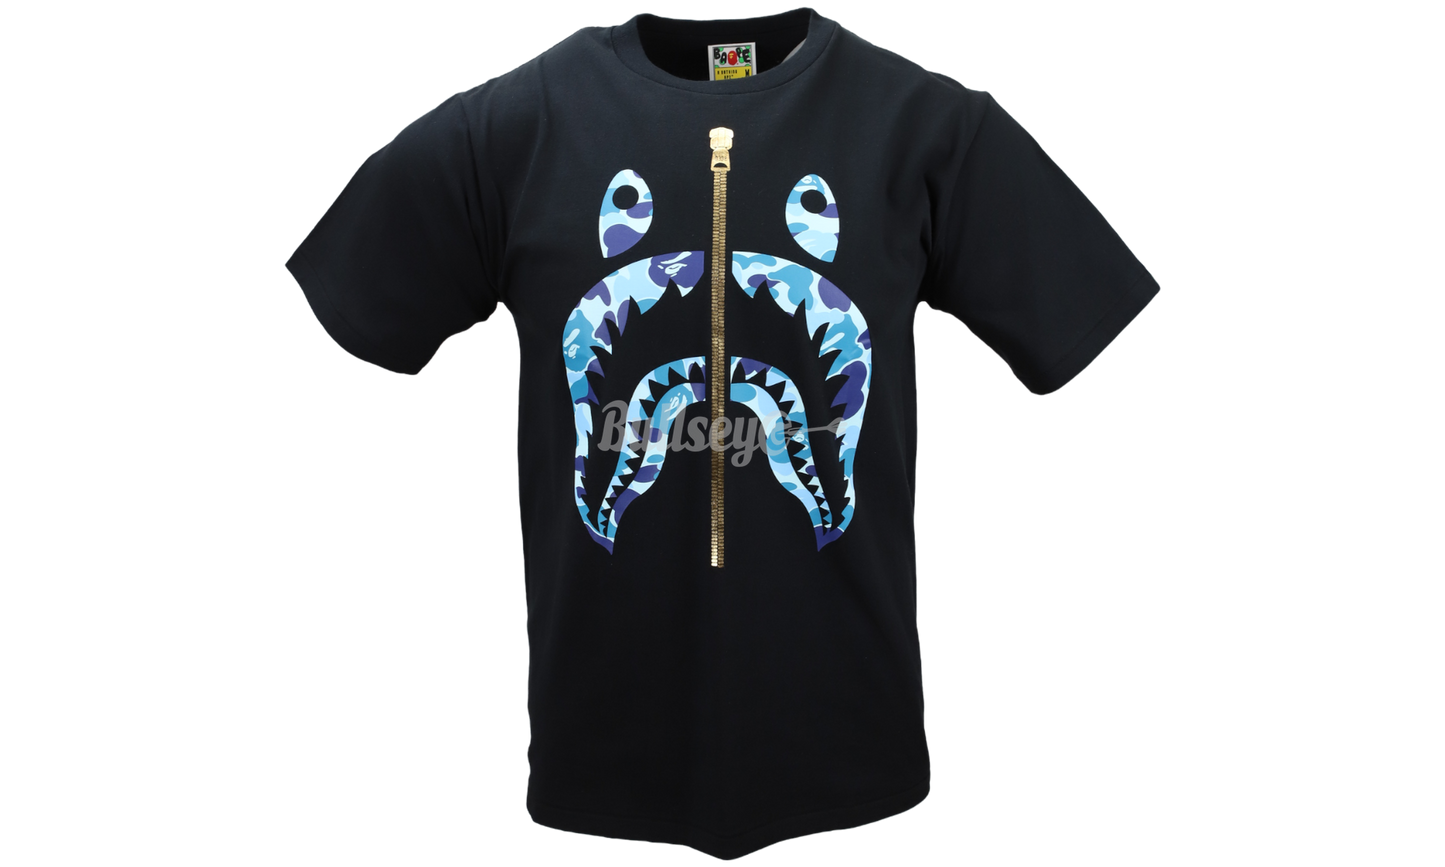 Bape ABC Black/Blue Camo Shark T-Shirt-Bullseye Sneaker Boutique